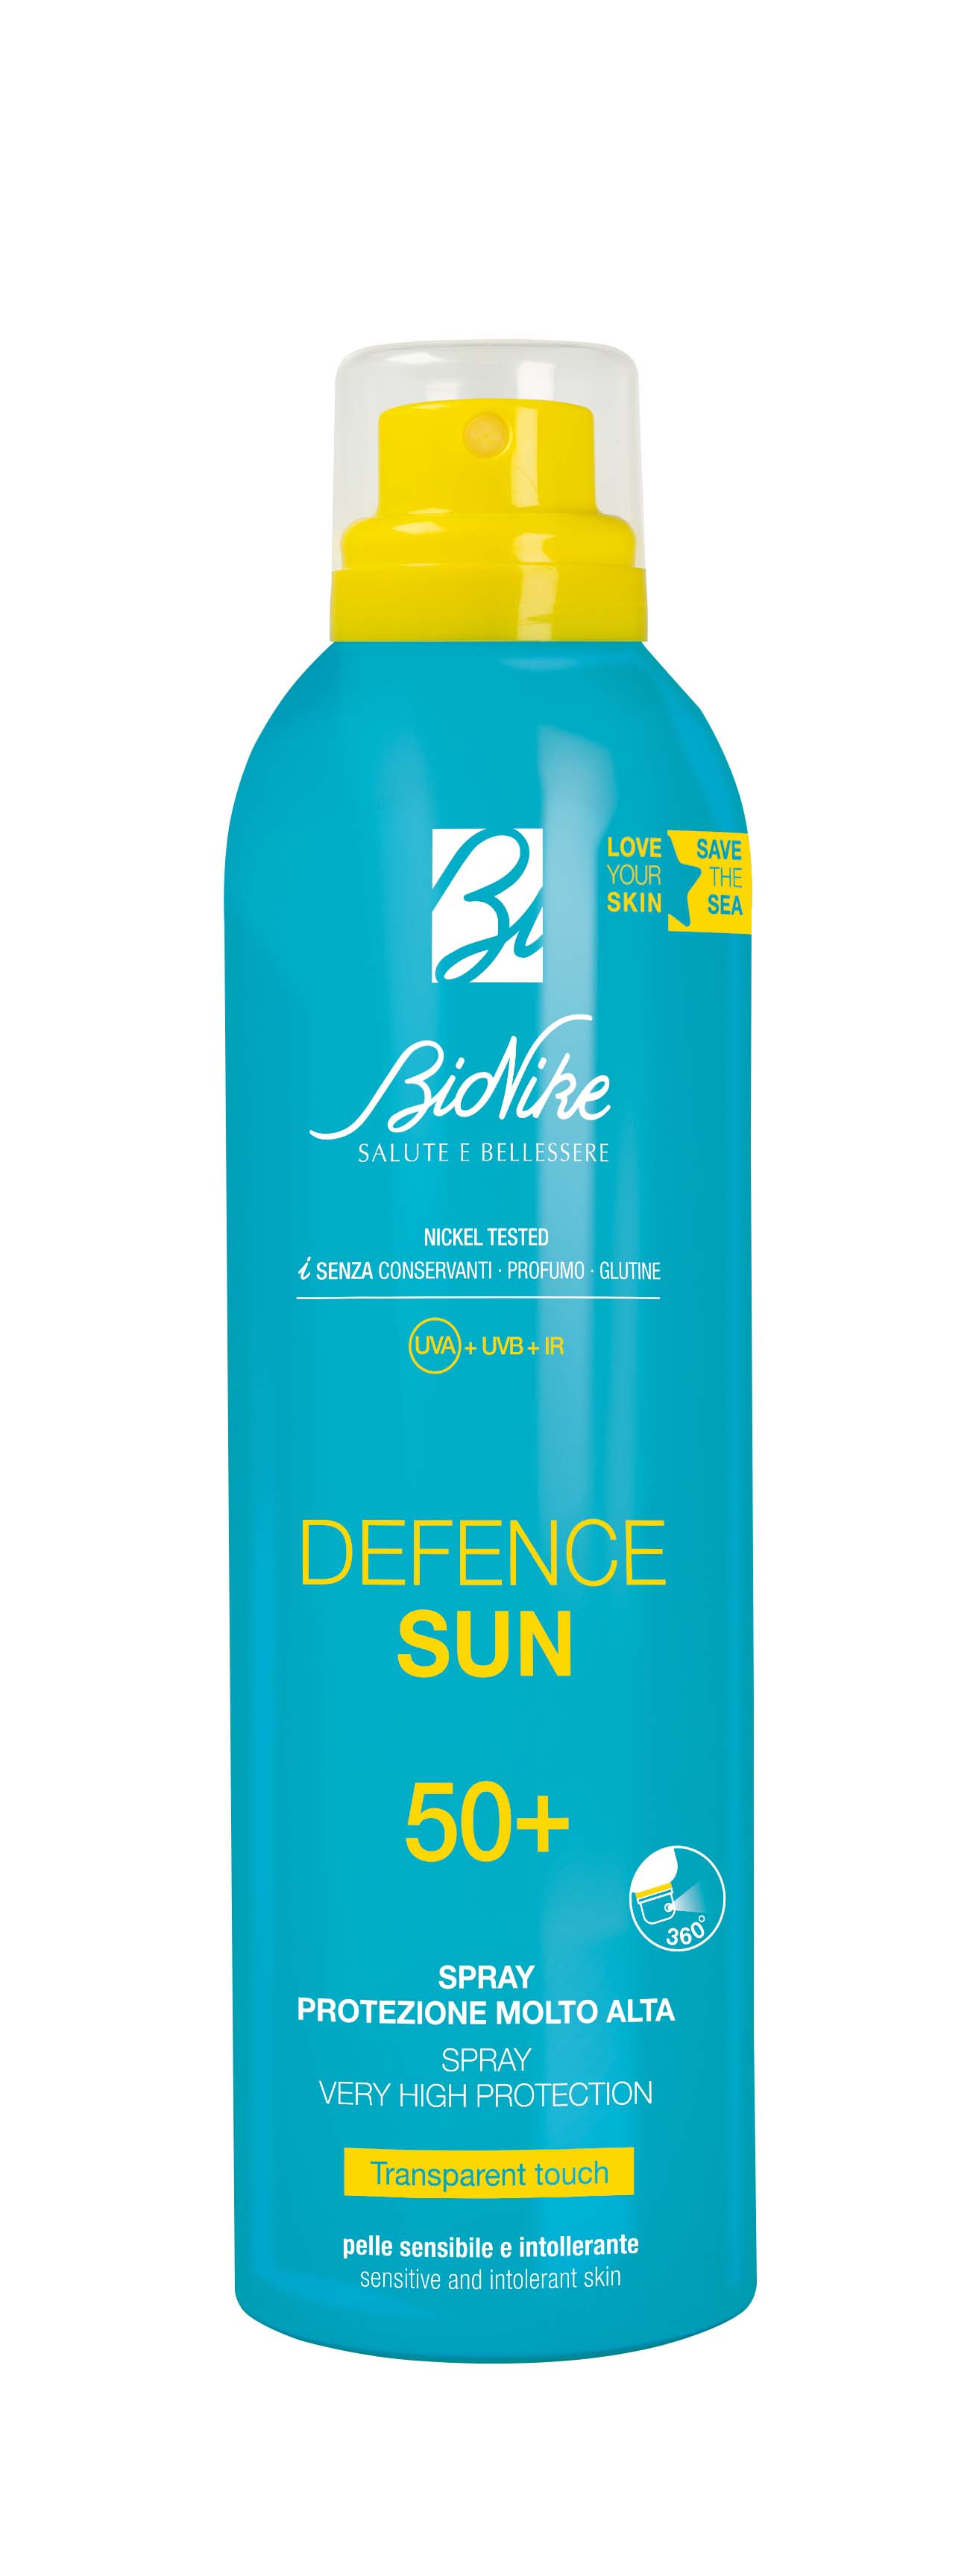 Bionike Defence Sun spray 50+